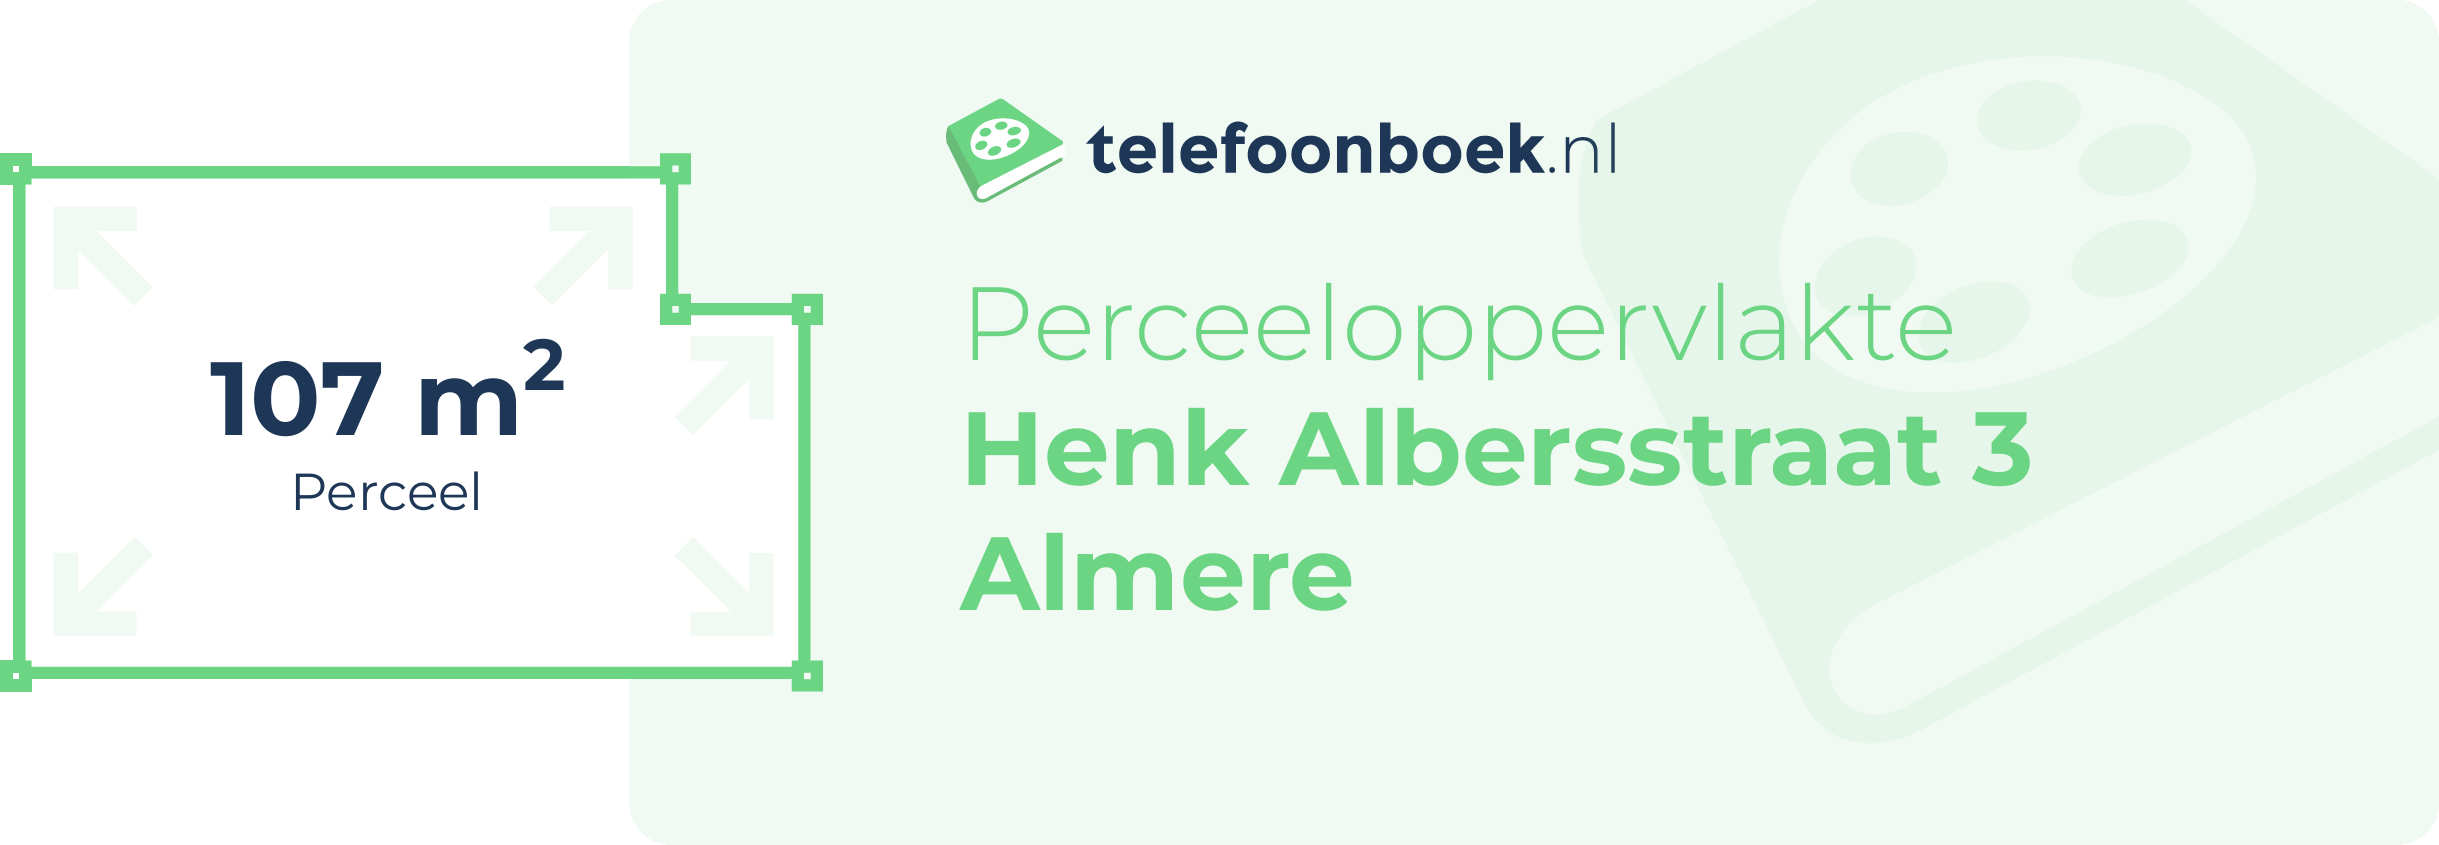 Perceeloppervlakte Henk Albersstraat 3 Almere